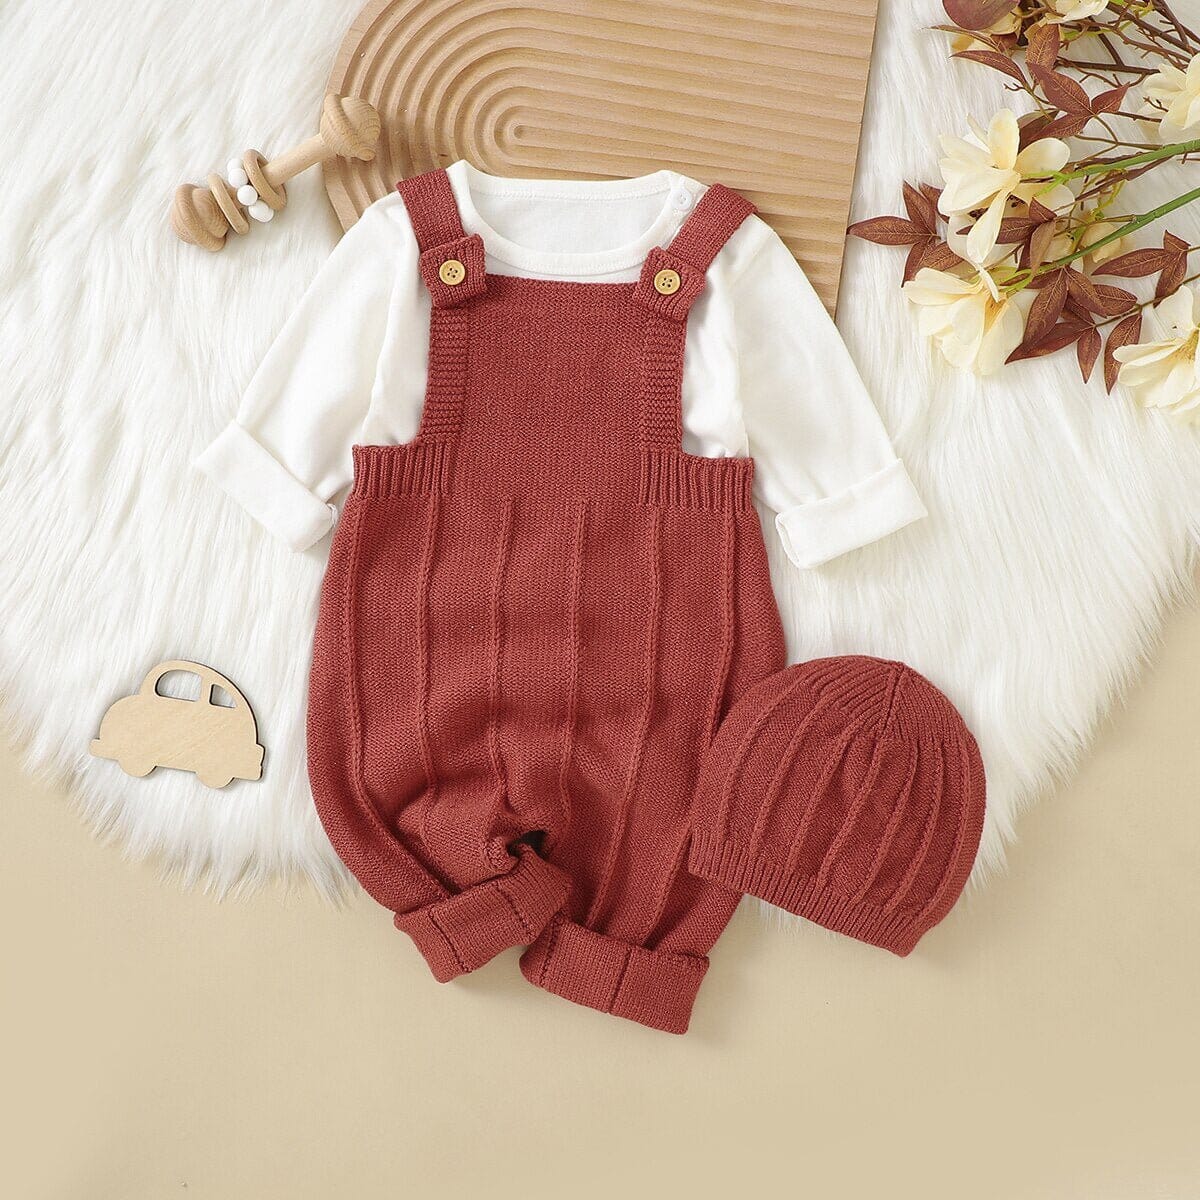 Knitted Newborn Jumpsuit & Hat Set - RoniCorn